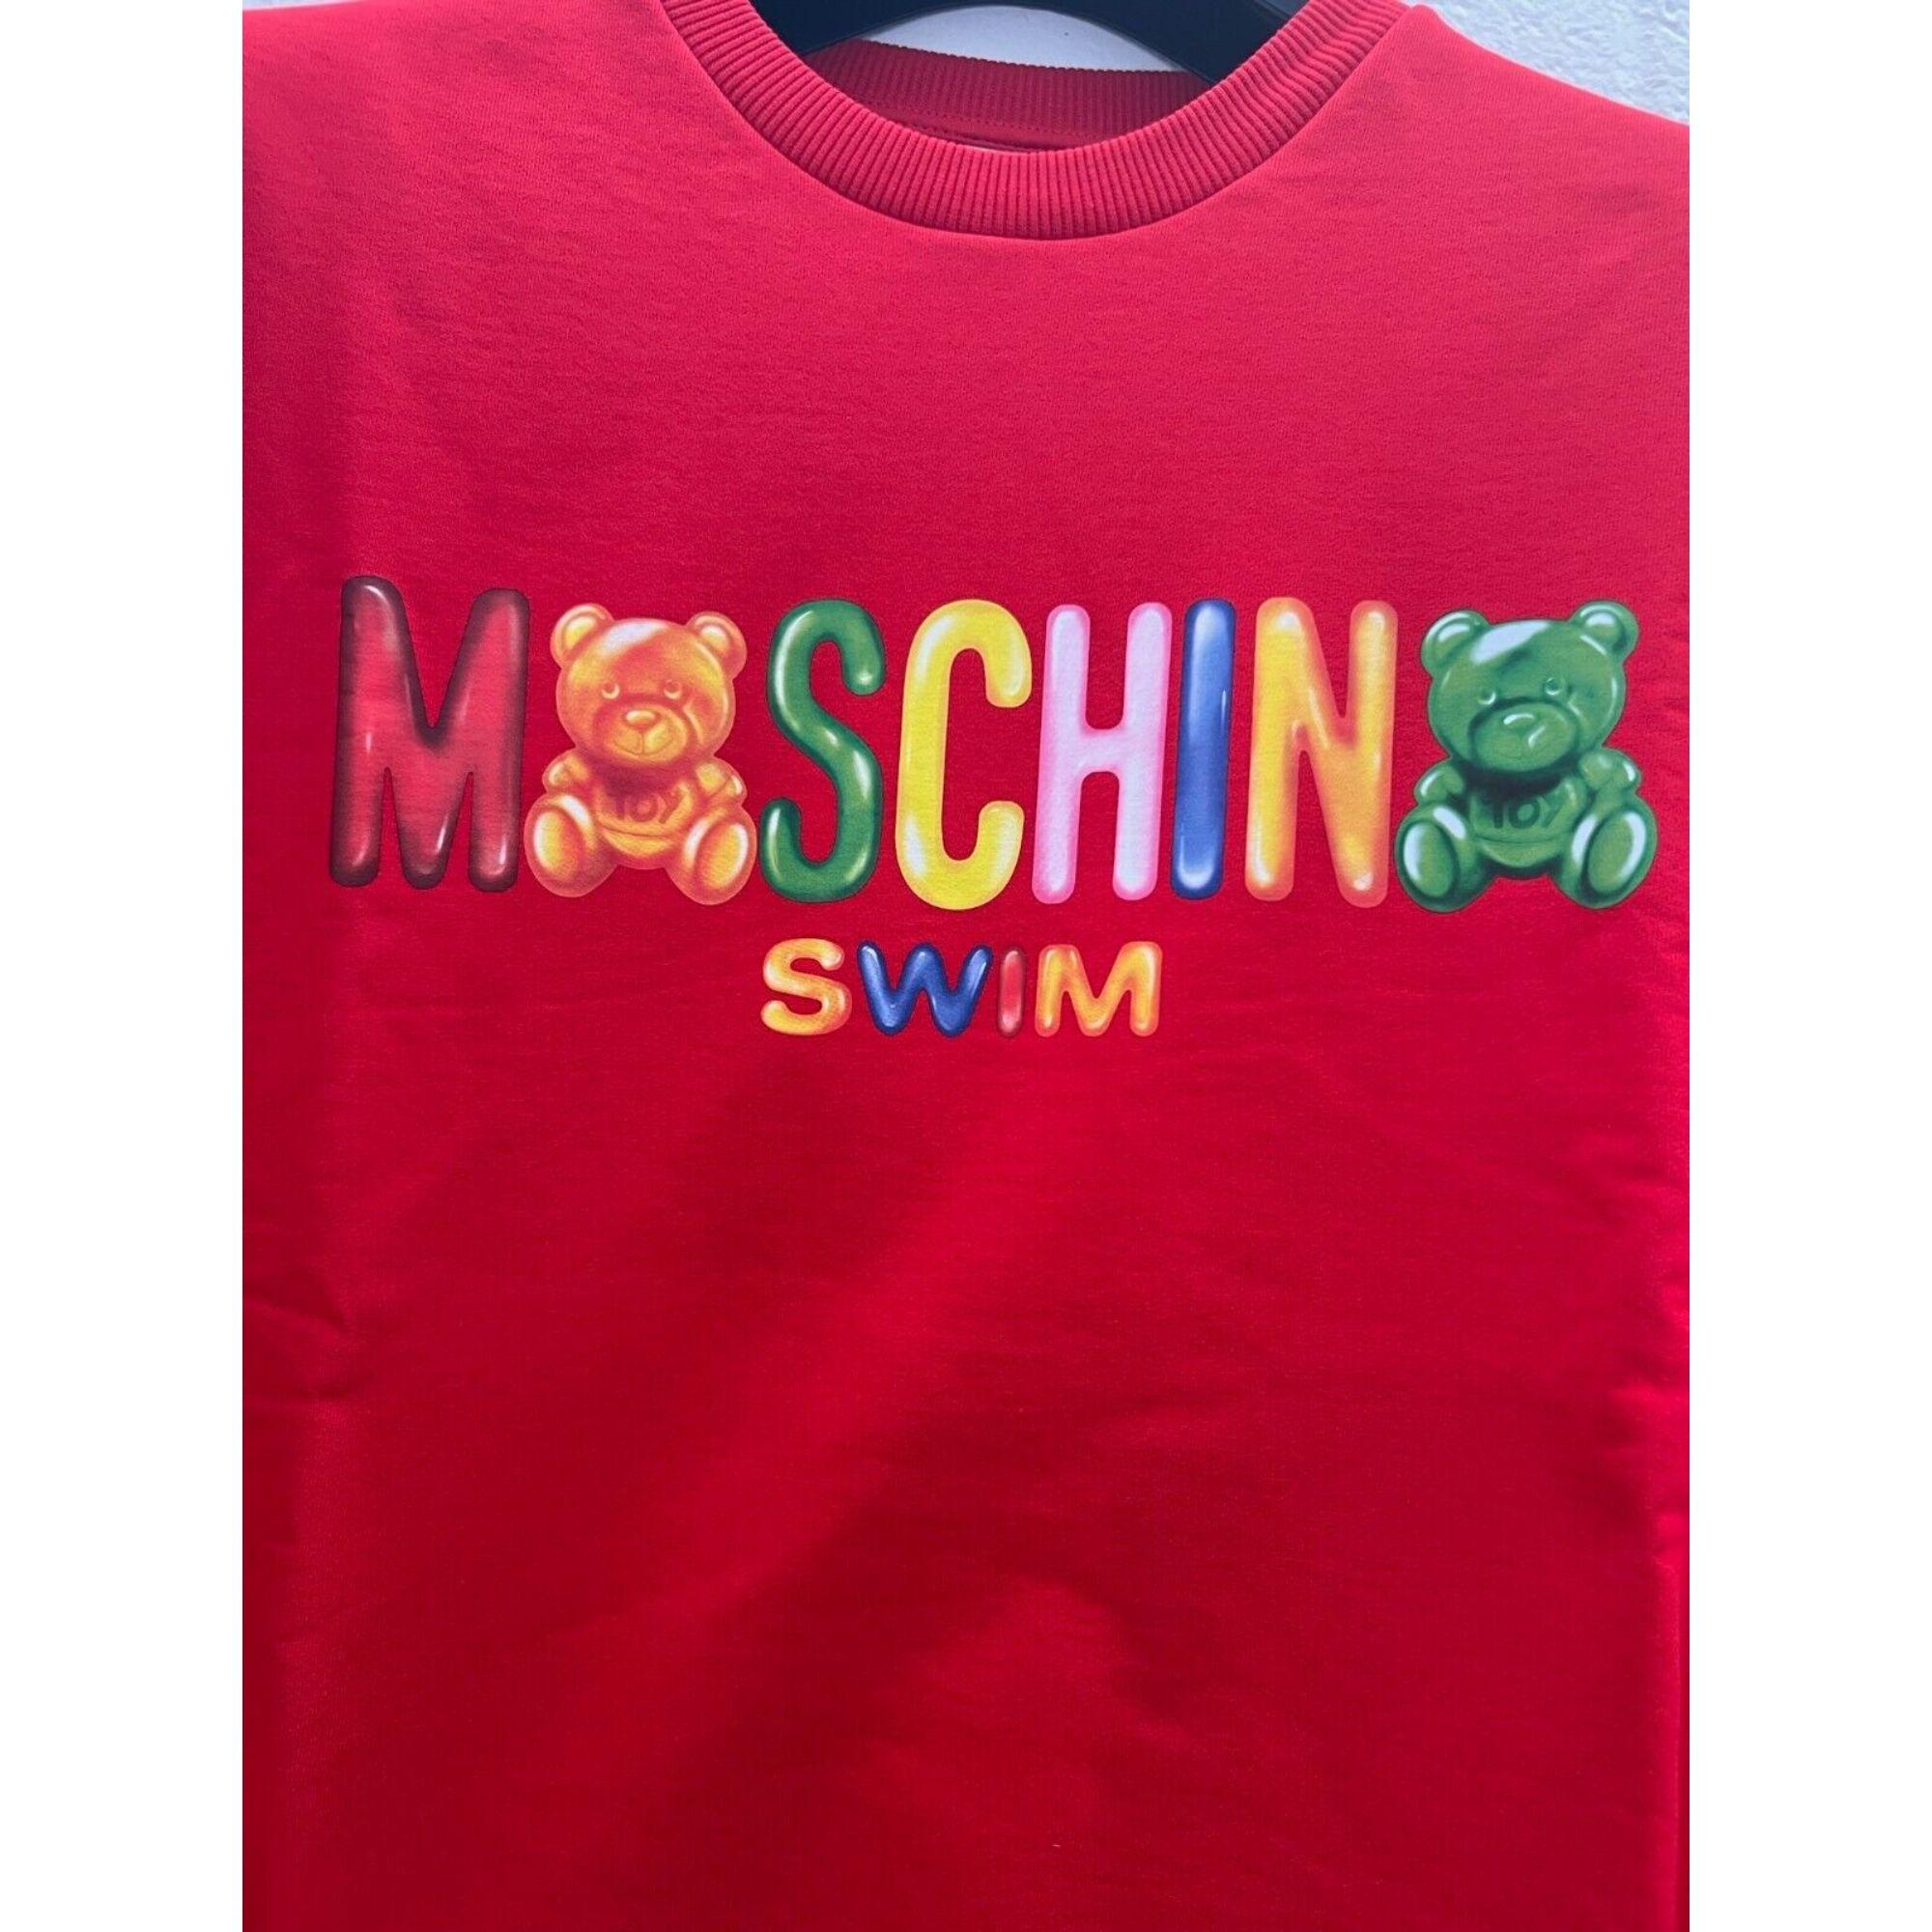 SS19 Moschino Swim Jelly Gummy Teddy Bear Sweatshirt by Jeremy Scott, Size S In New Condition For Sale In Palm Springs, CA